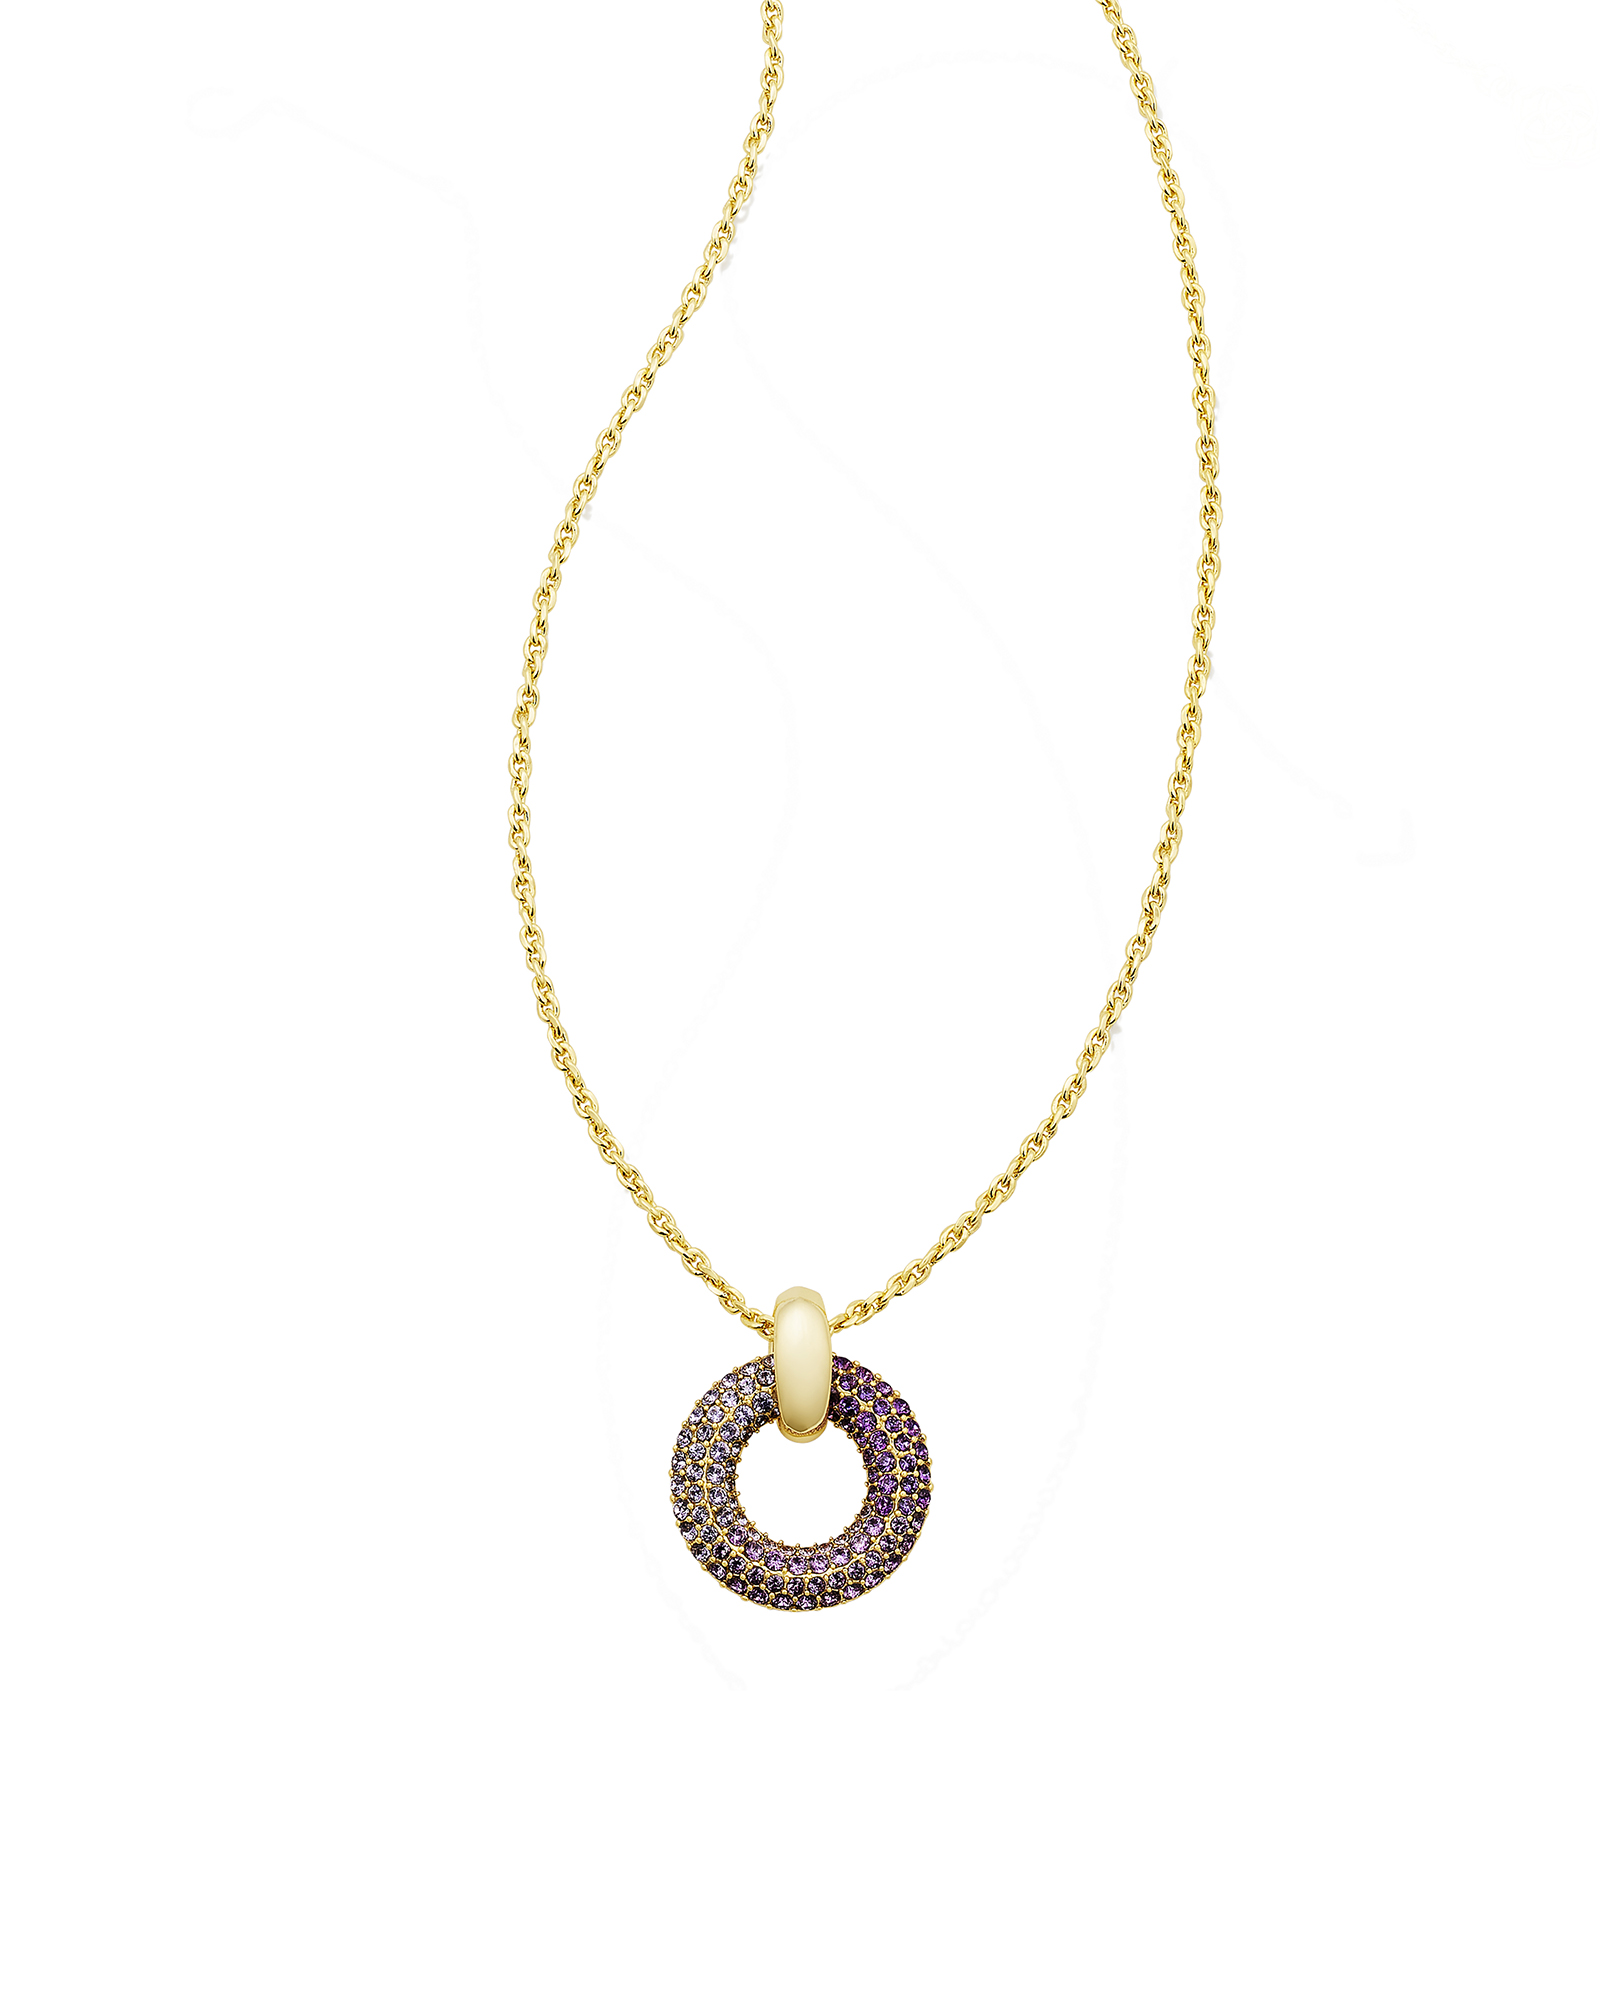 Kendra Scott Elisa Enamel Framed Short Pendant Necklace in Dark Lavender  Ombre Illusion, Gold-Plated | REEDS Jewelers